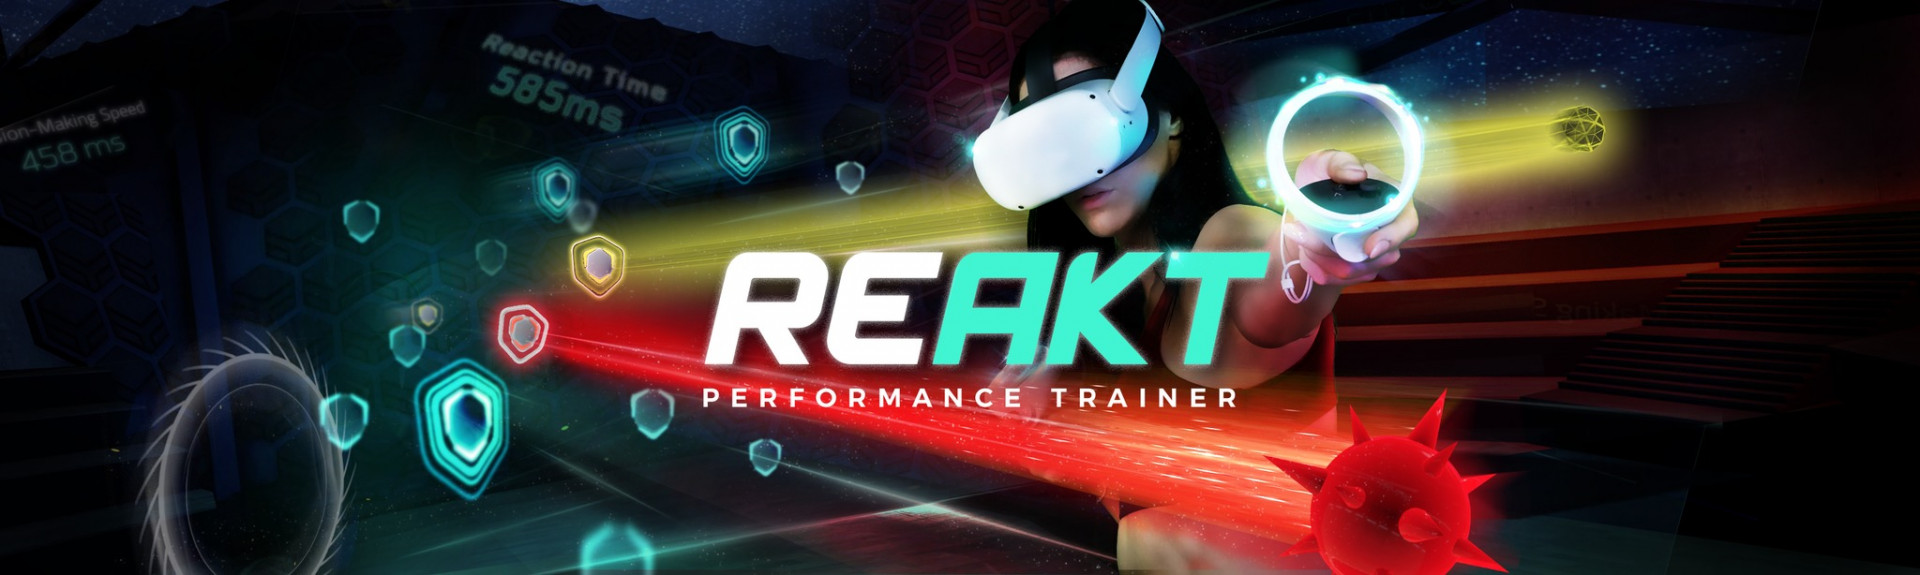 REAKT Performance Trainer